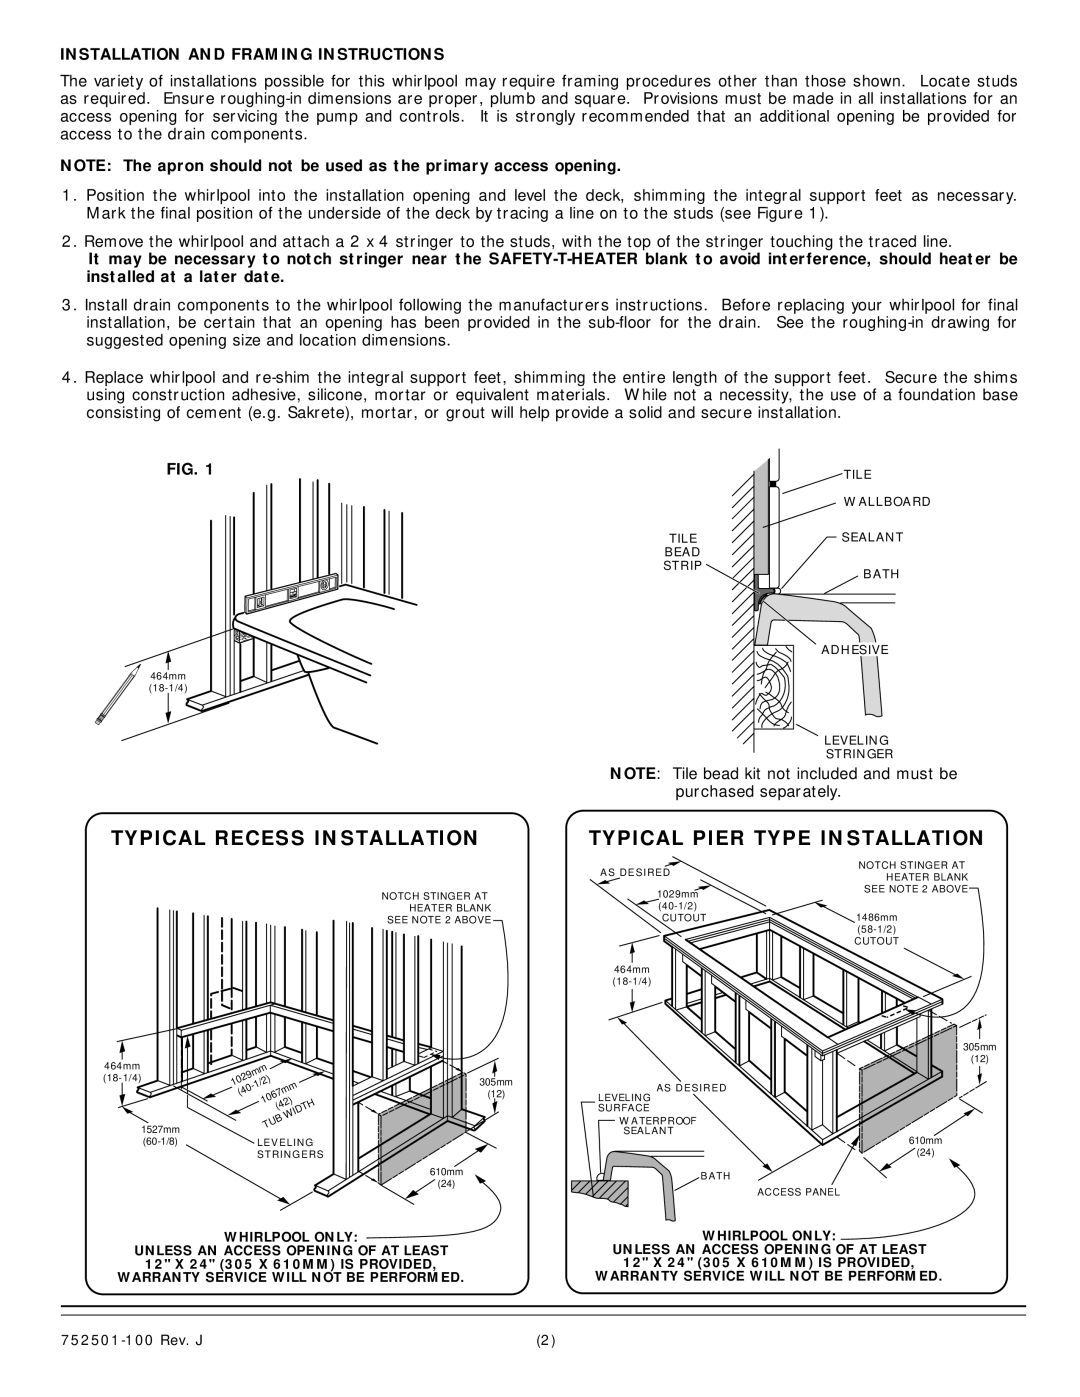 American Standard 2772.XXXW installation instructions Typical Recess Installation, Typical Pier Type Installation 